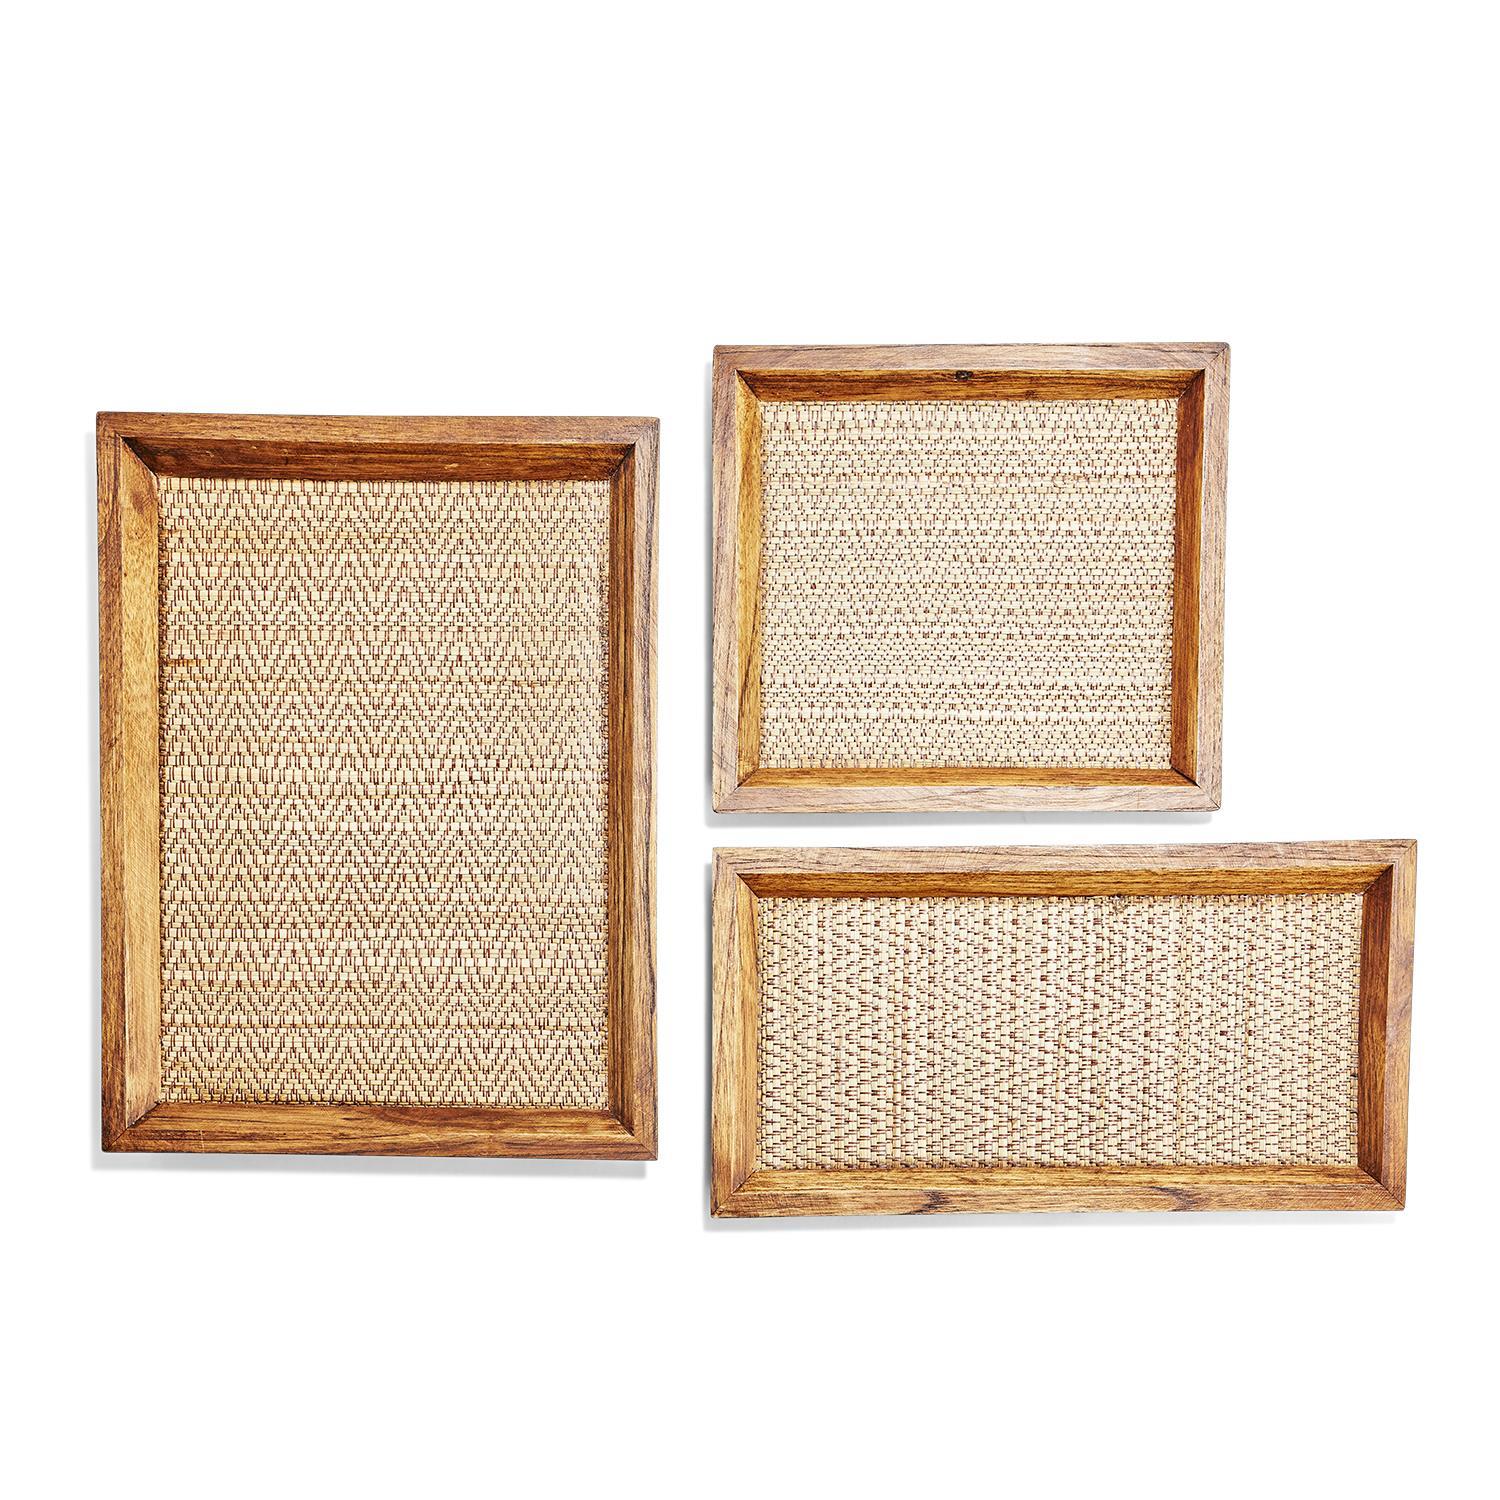 Teak Decorative Trays with Bamboo Weaving